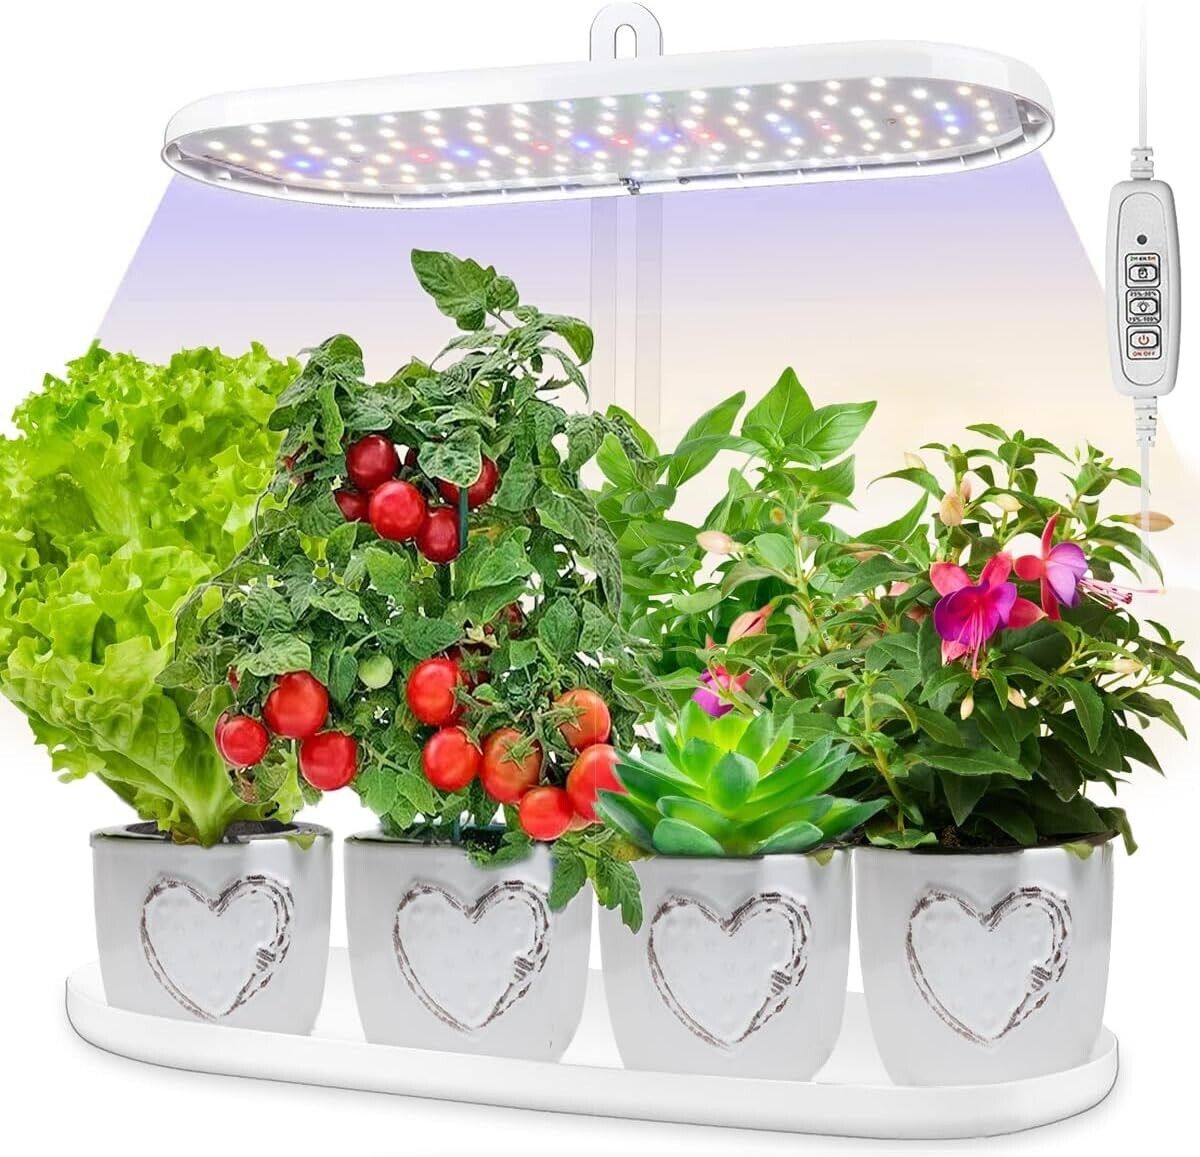  Indoor Garden Led Grow Light:Herb Seeds Kitchen Garden Grow Kit - House Plant 